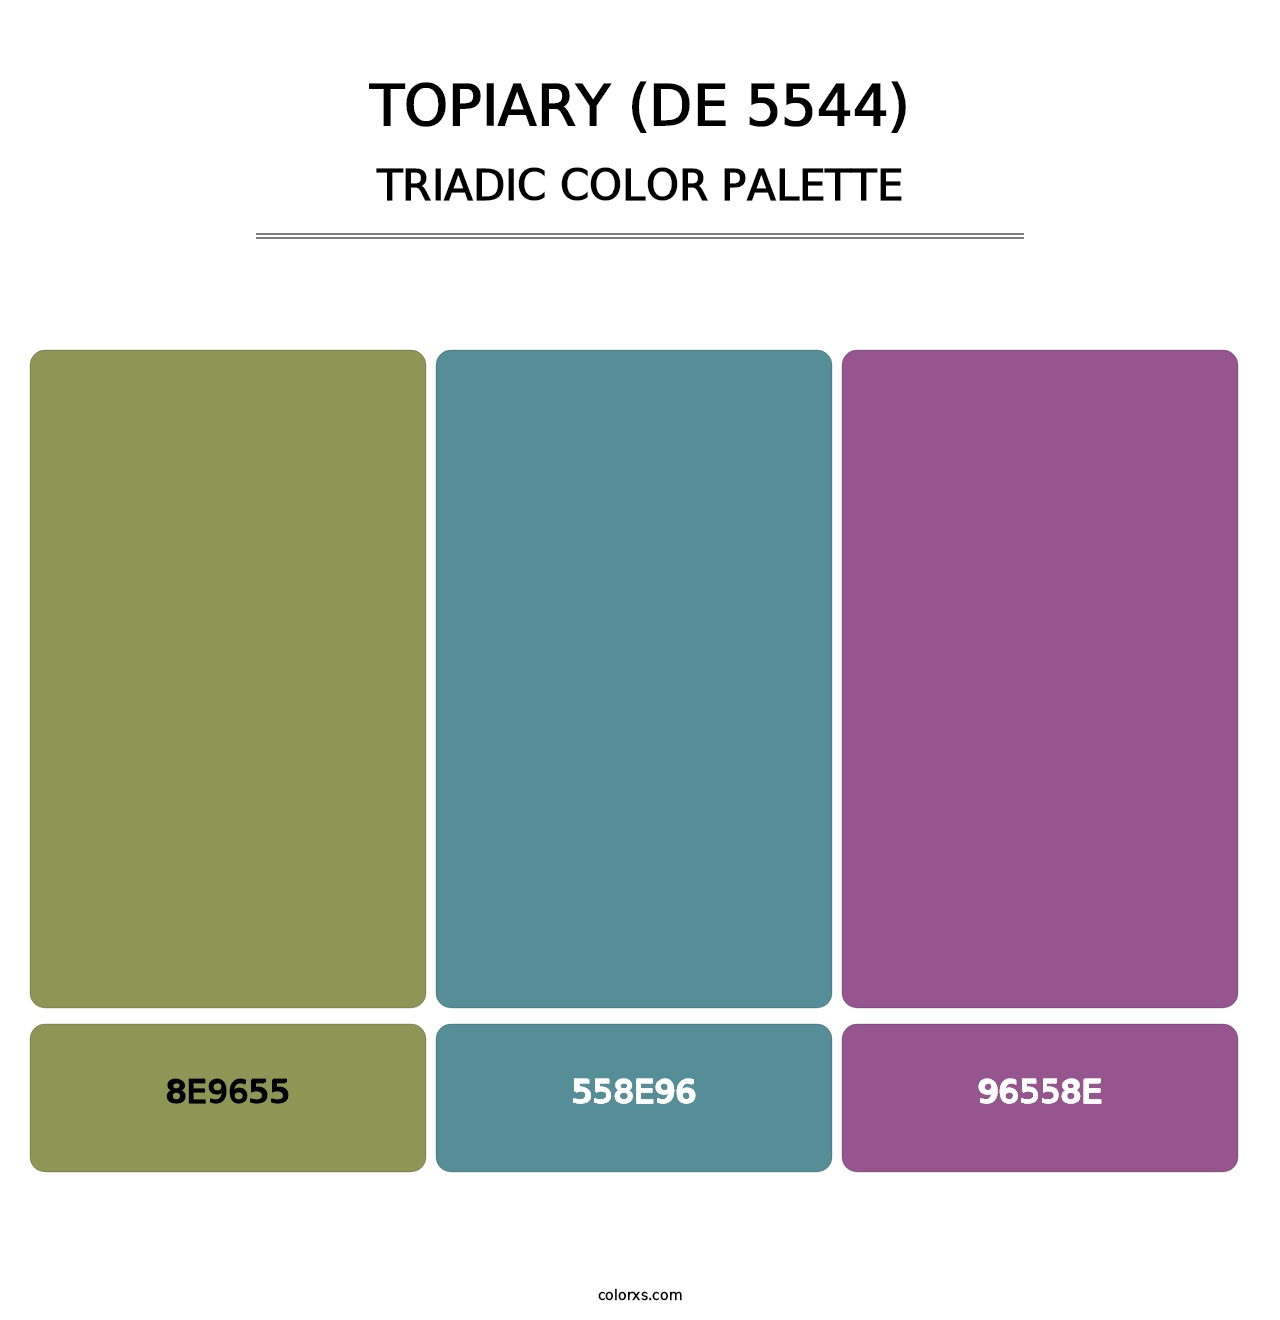 Topiary (DE 5544) - Triadic Color Palette